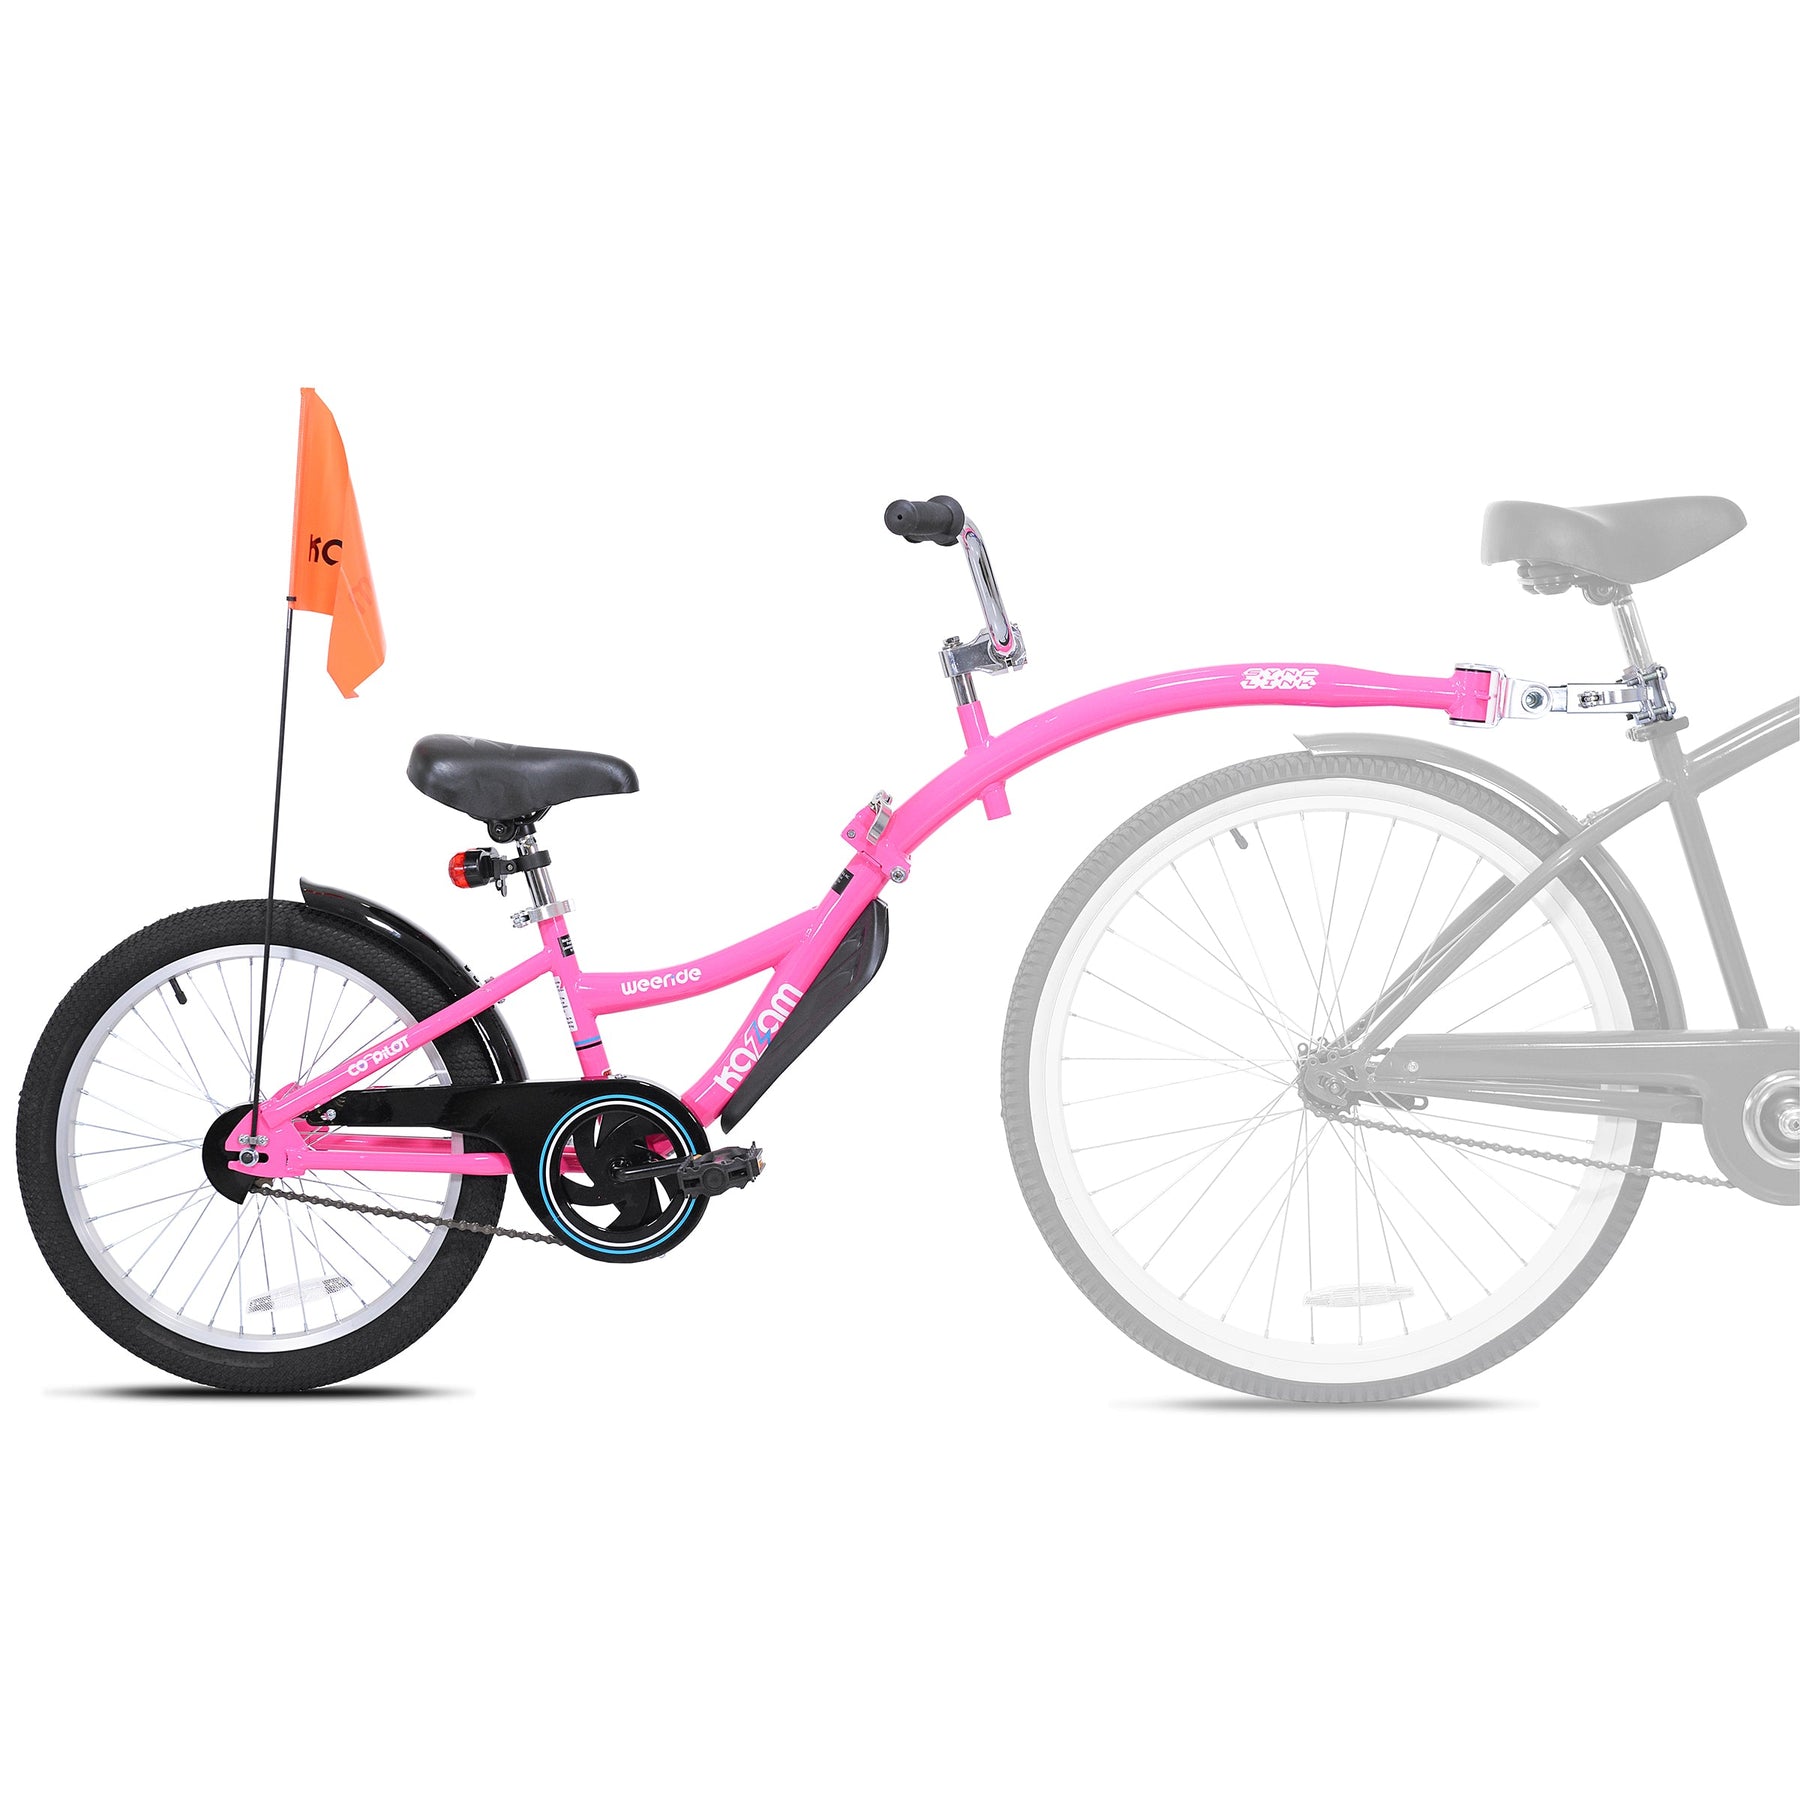 20" Kazam Co-Pilot | Trailer Bike For Kids Ages 6+